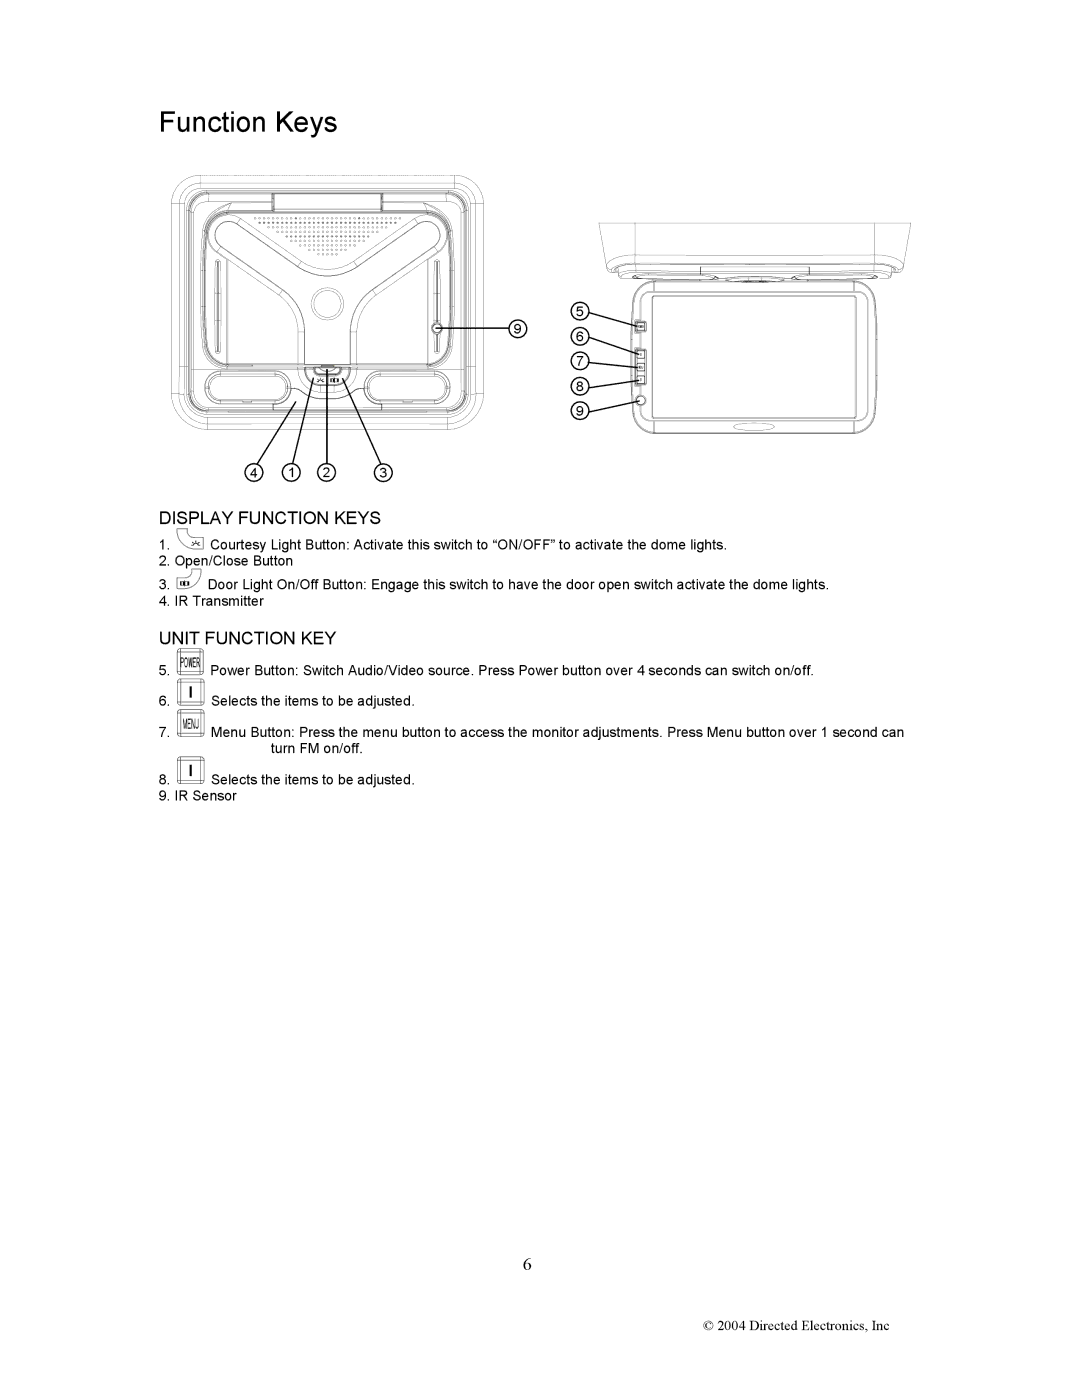 Directed Electronics OHD1502 manual Display Function Keys 